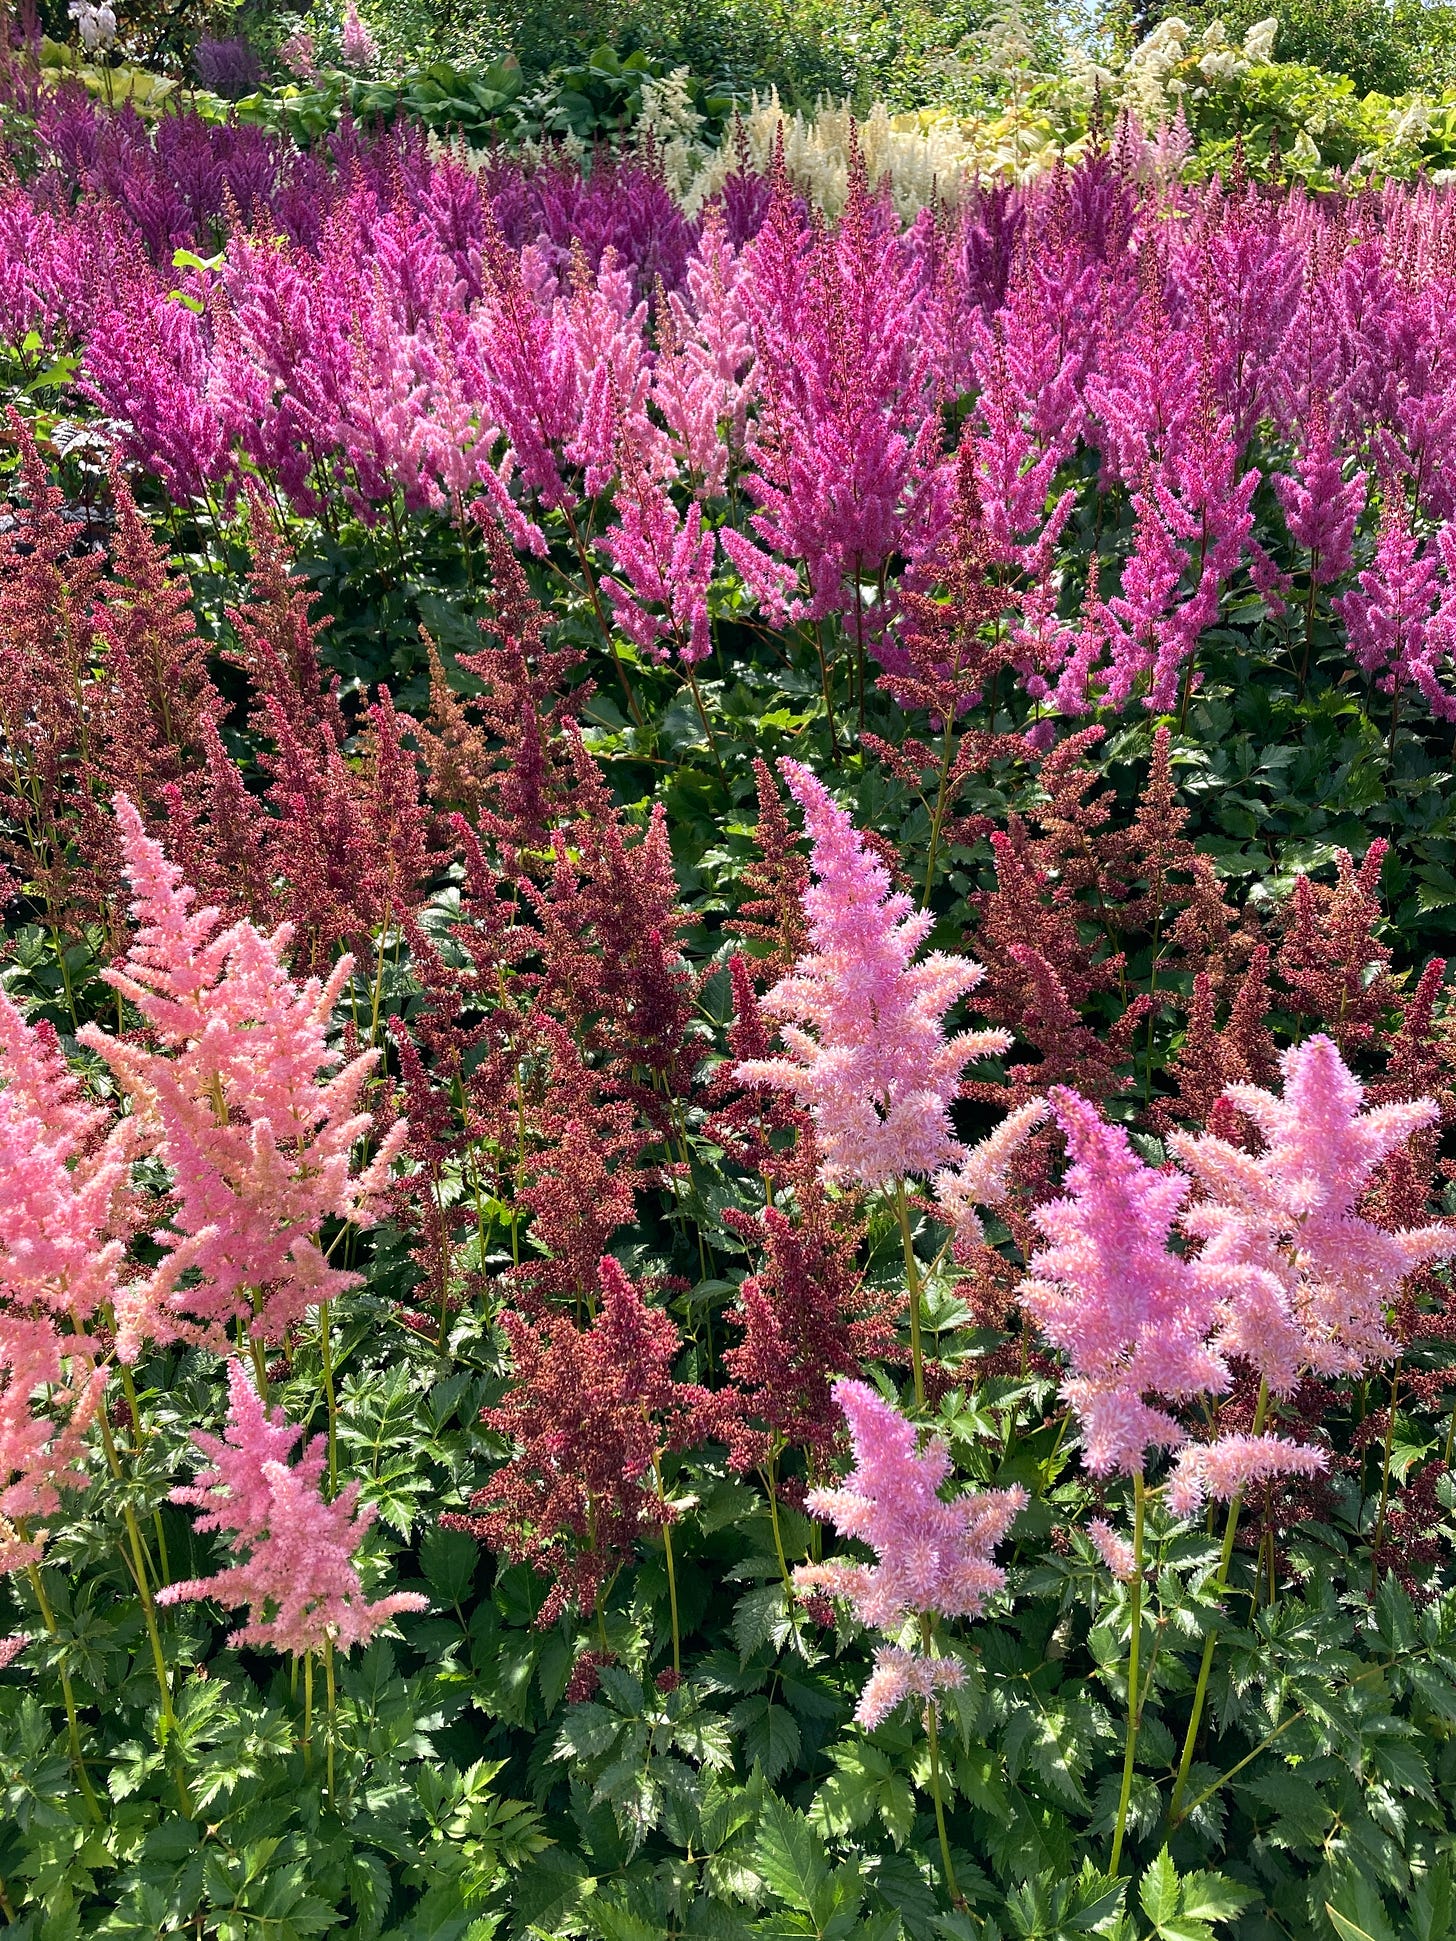 Photo of pink flowers from Vancouver's VanDusen Botanical Garden